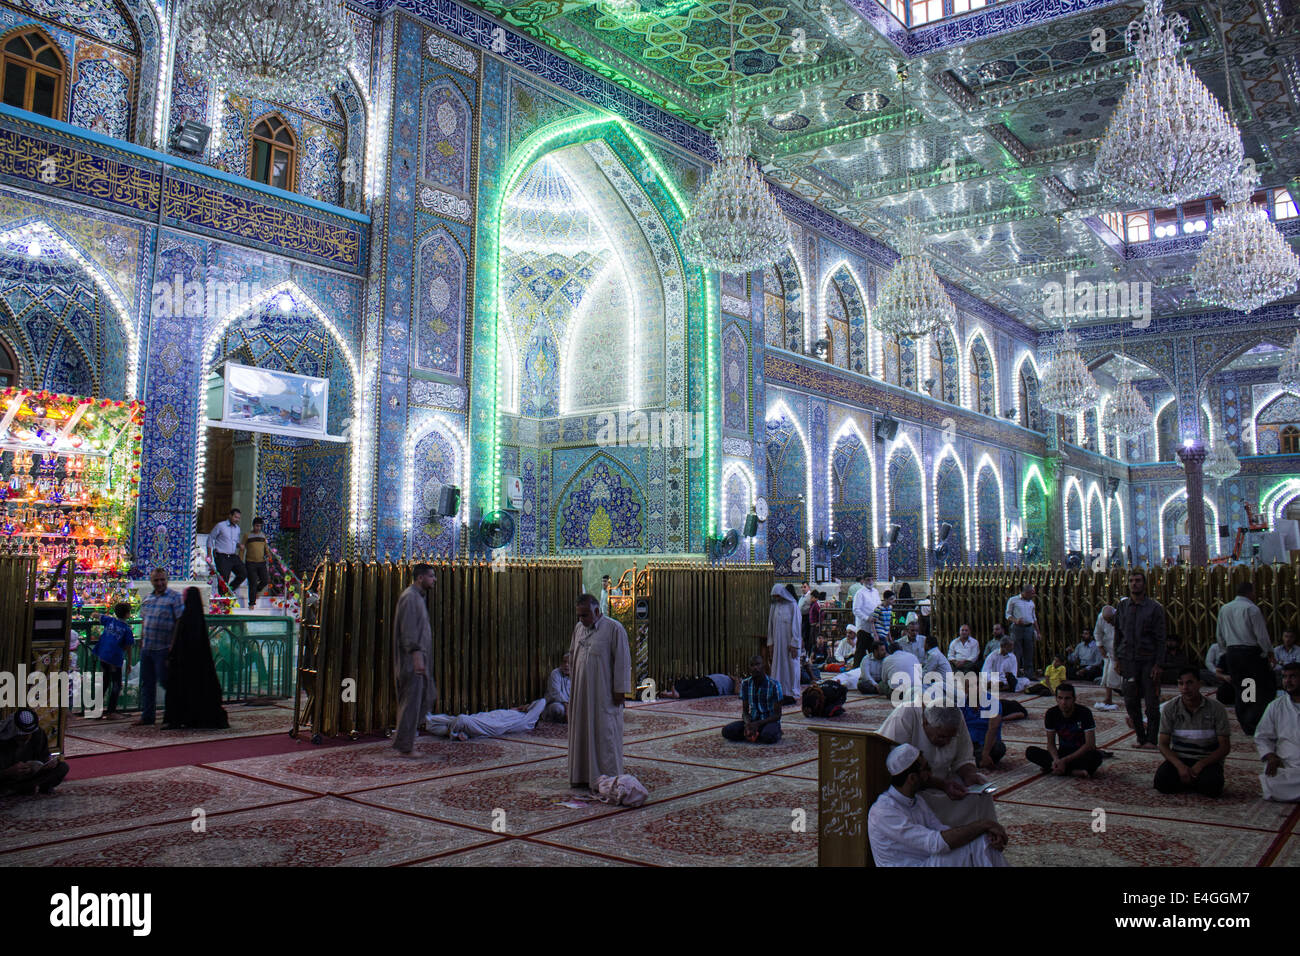 The shrine of Imam Hussein in Karbala Stock Photo